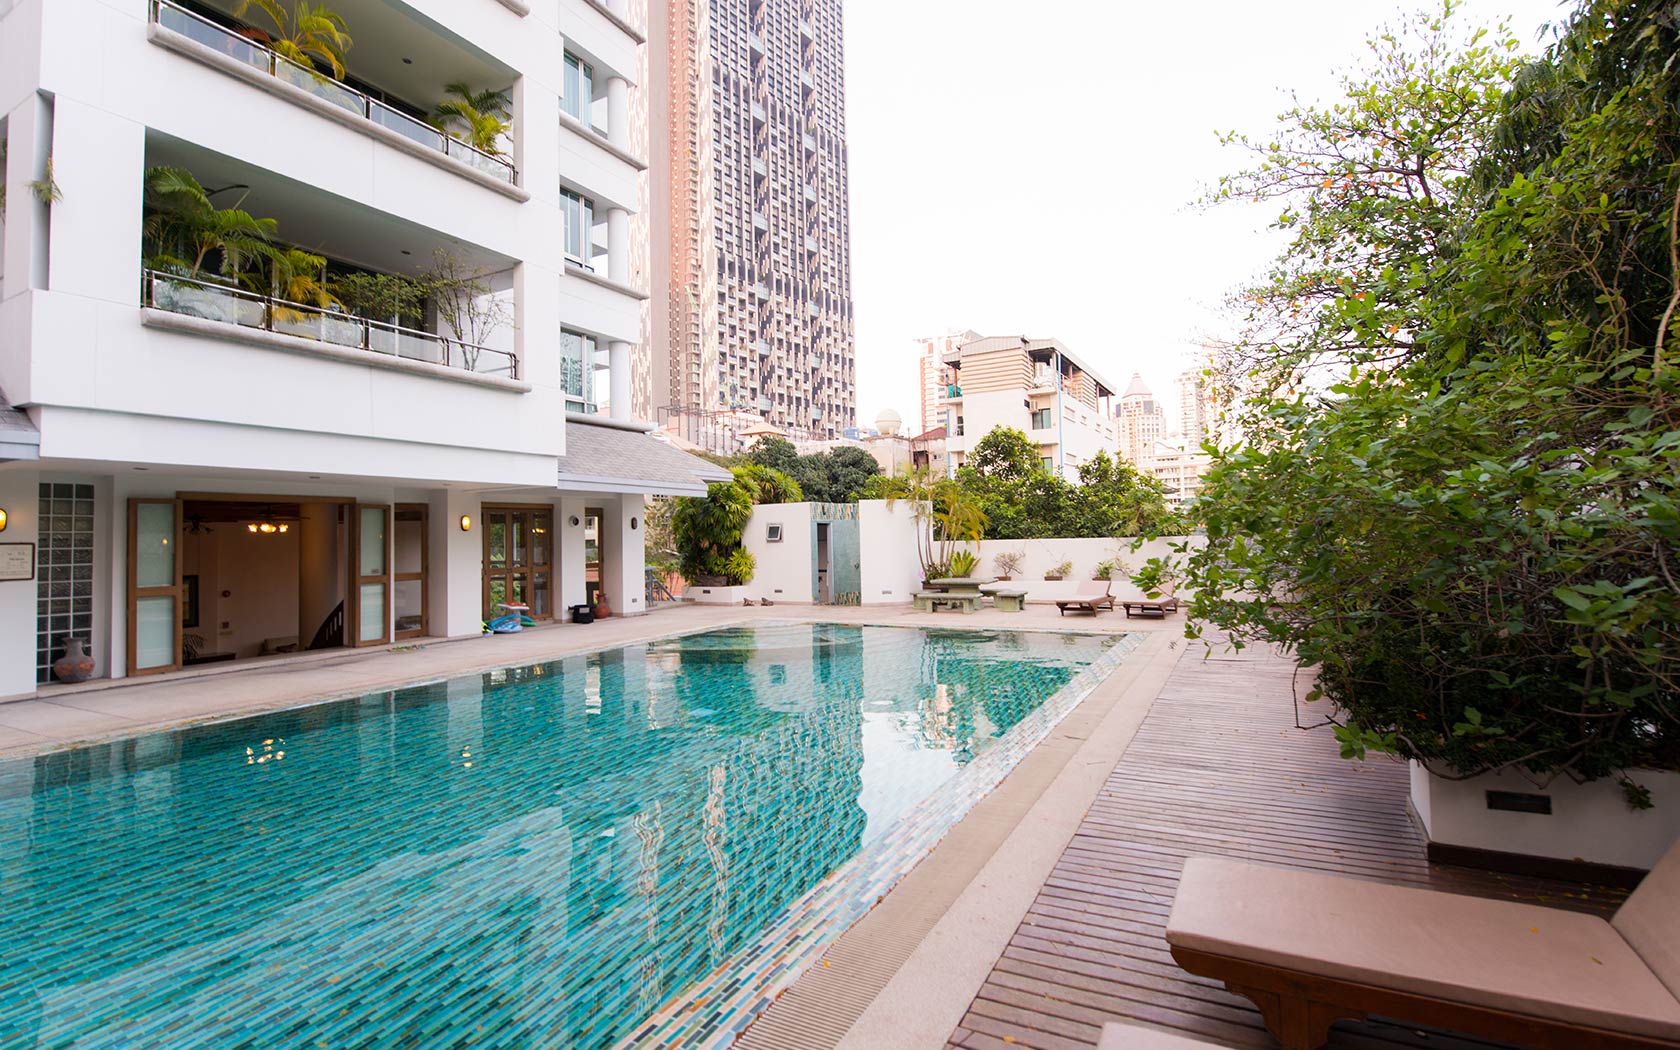 Mode Sathorn Hotel Rooms, Official Website | Bangkok Rooms